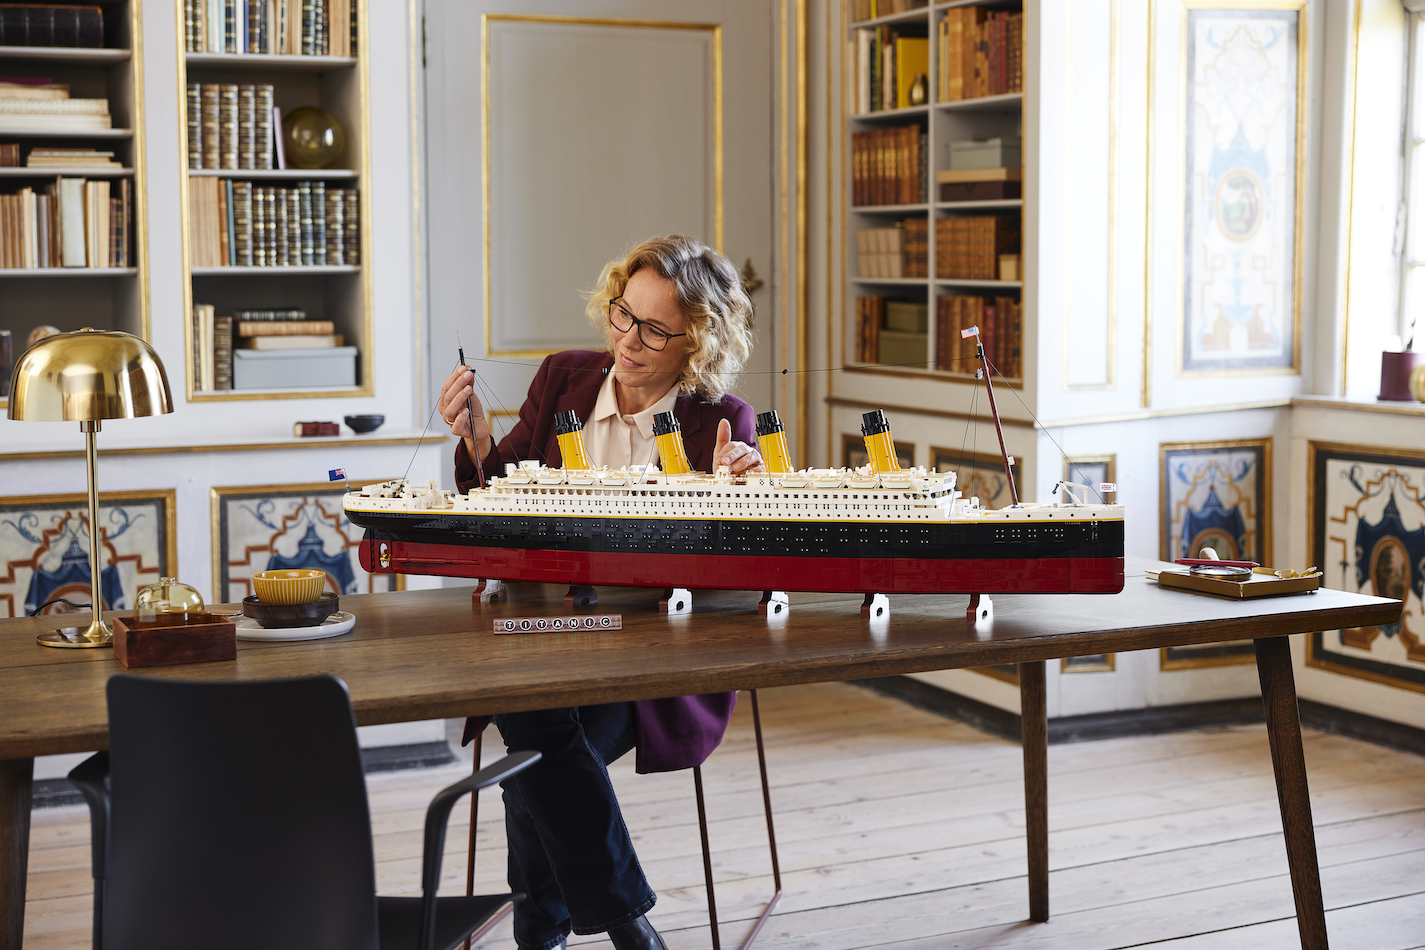 LEGO unveils the RMS Titanic